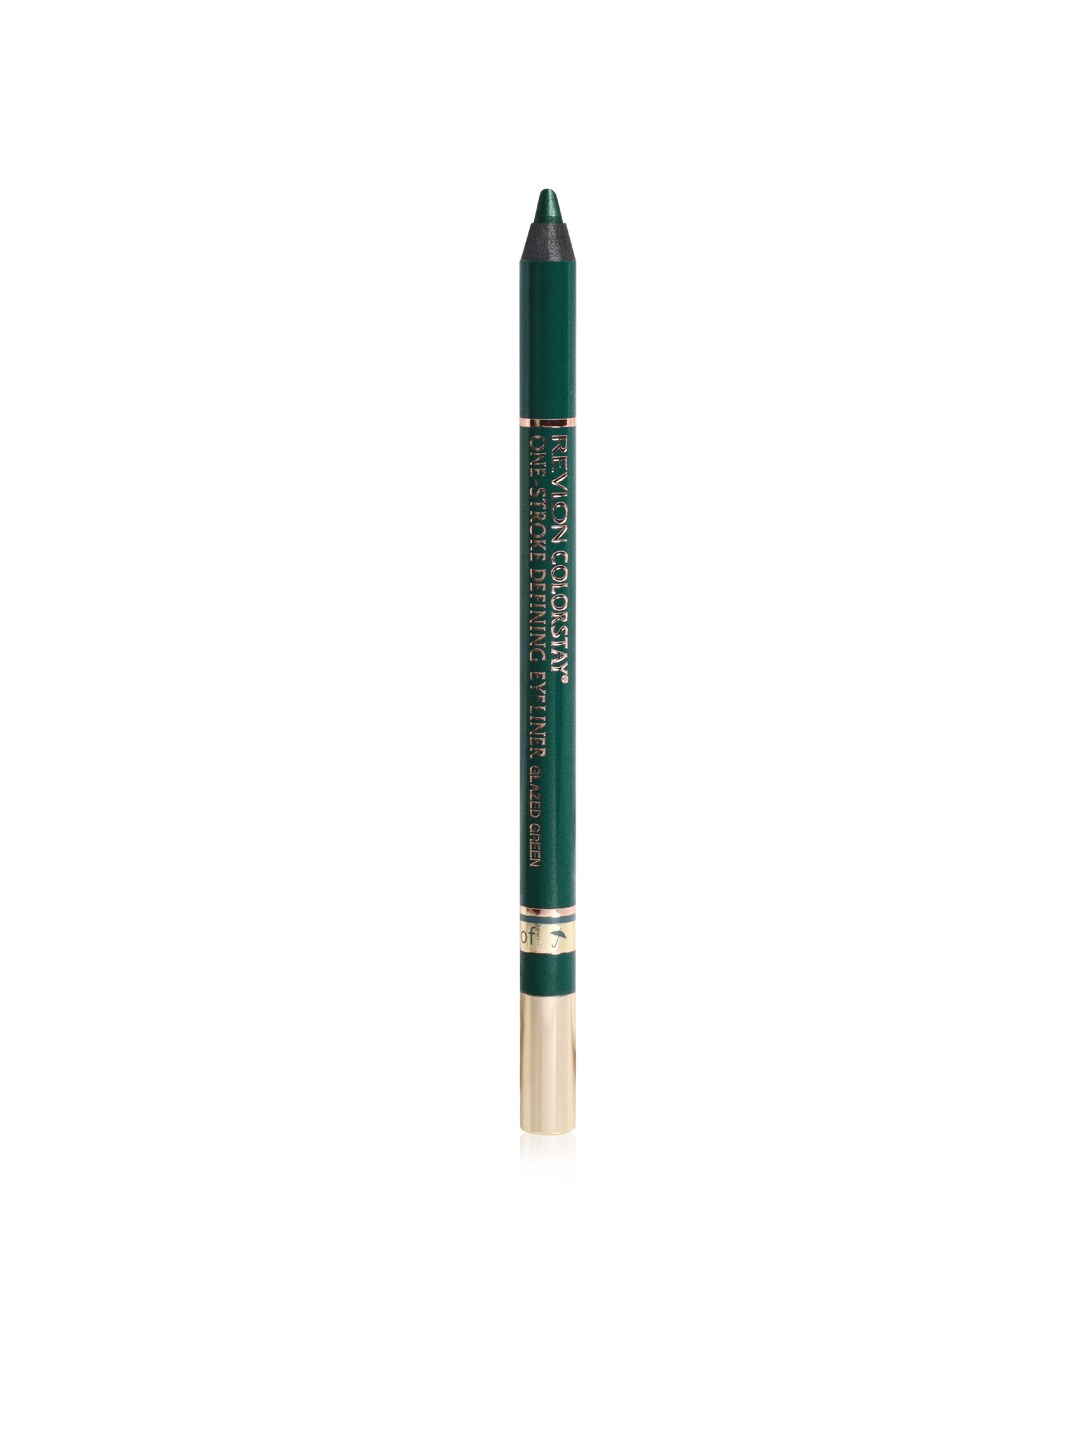 Revlon Colorstay One-Stroke Defining Glazed Green Eye Pencil